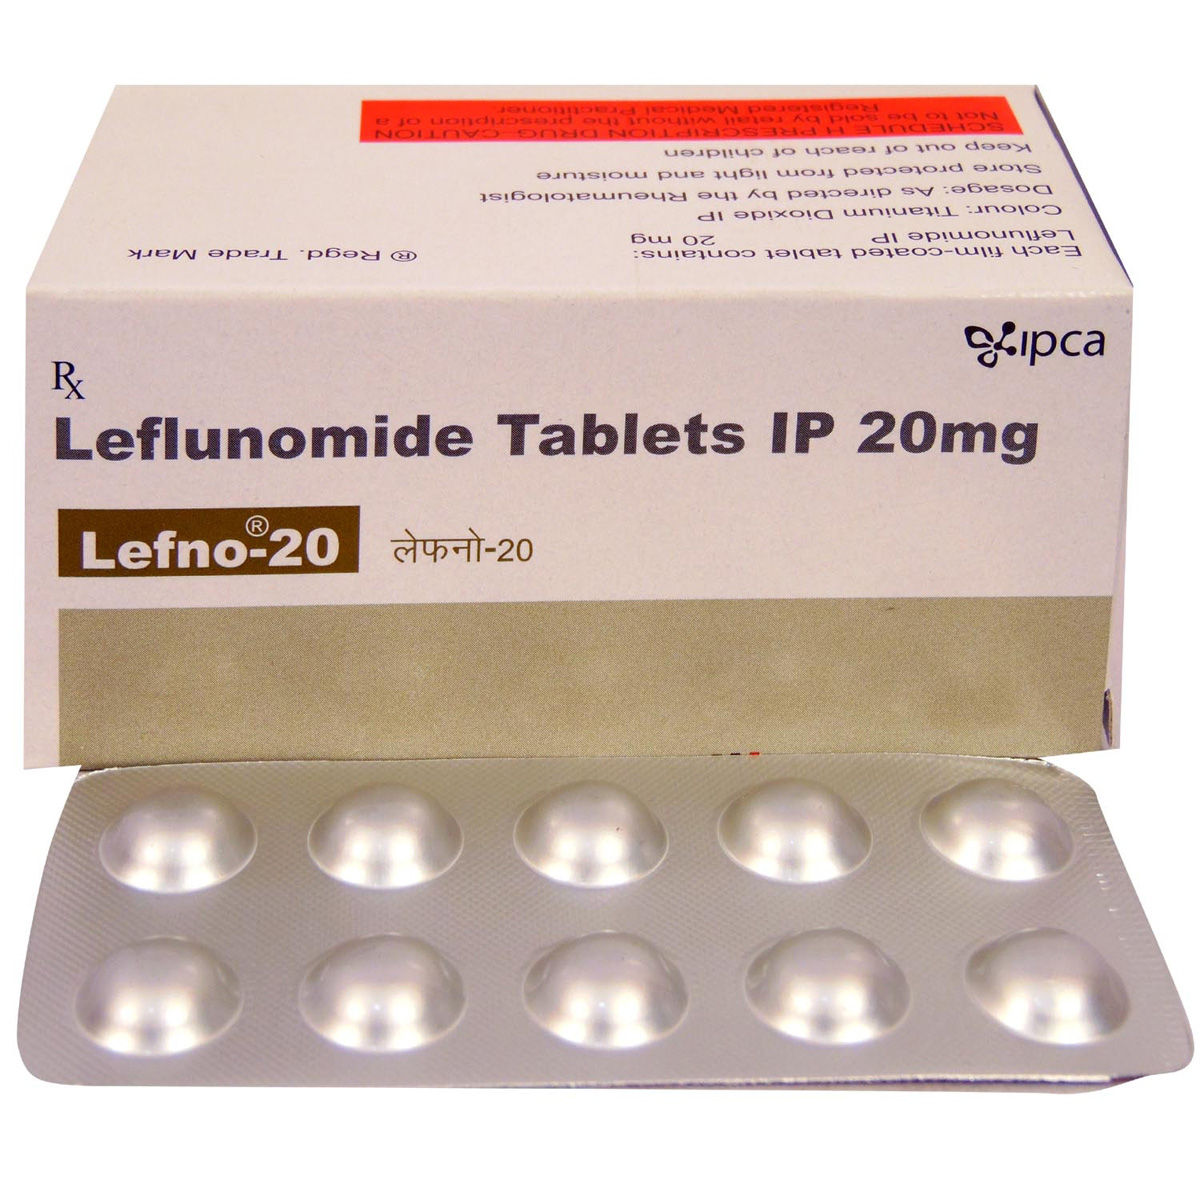 Buy Lefno-20 Tablet 10's Online